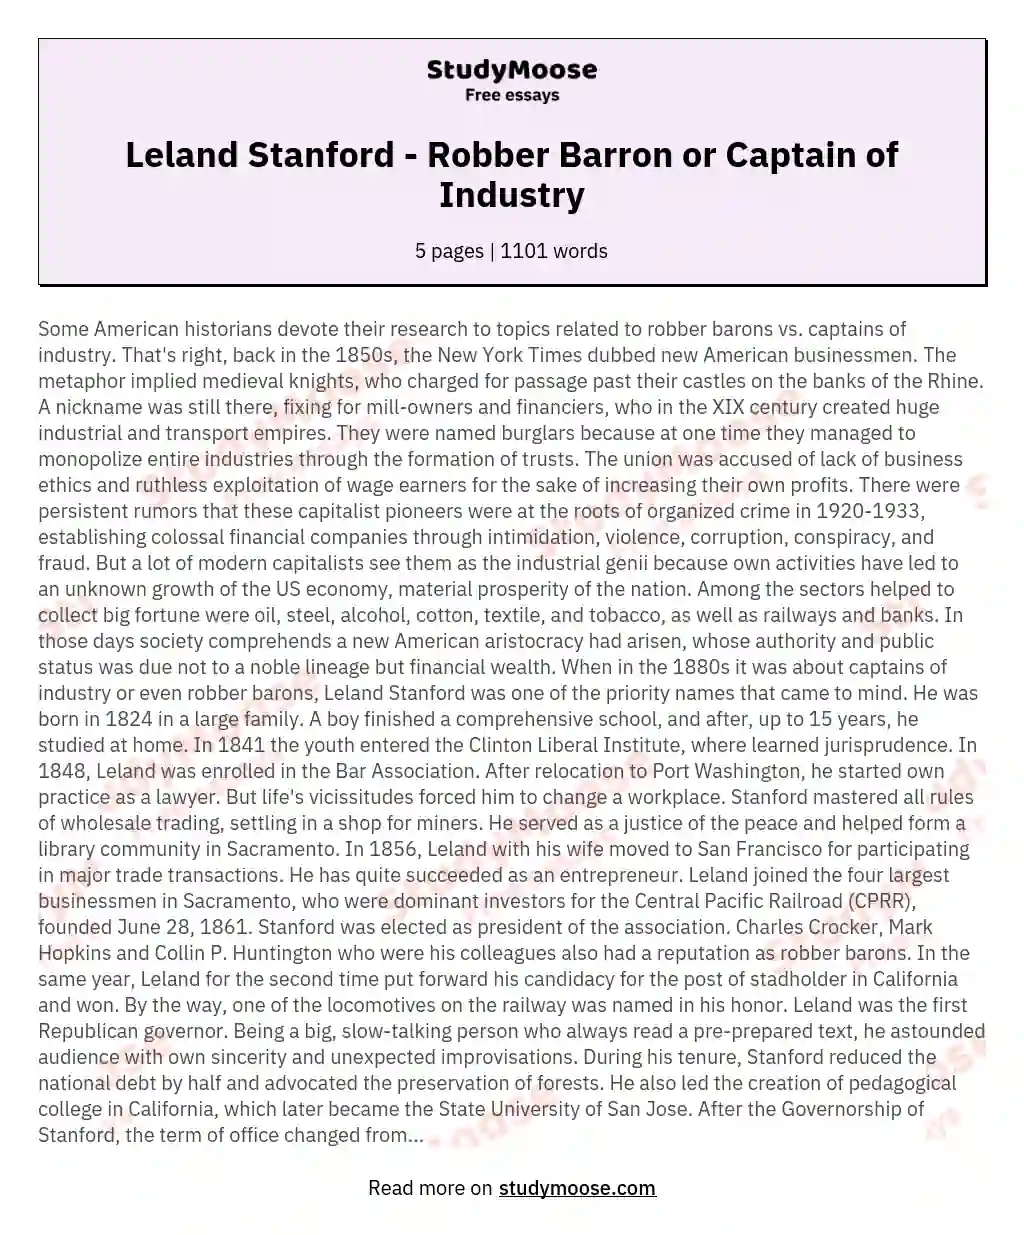 Leland Stanford - Robber Barron or Captain of Industry essay